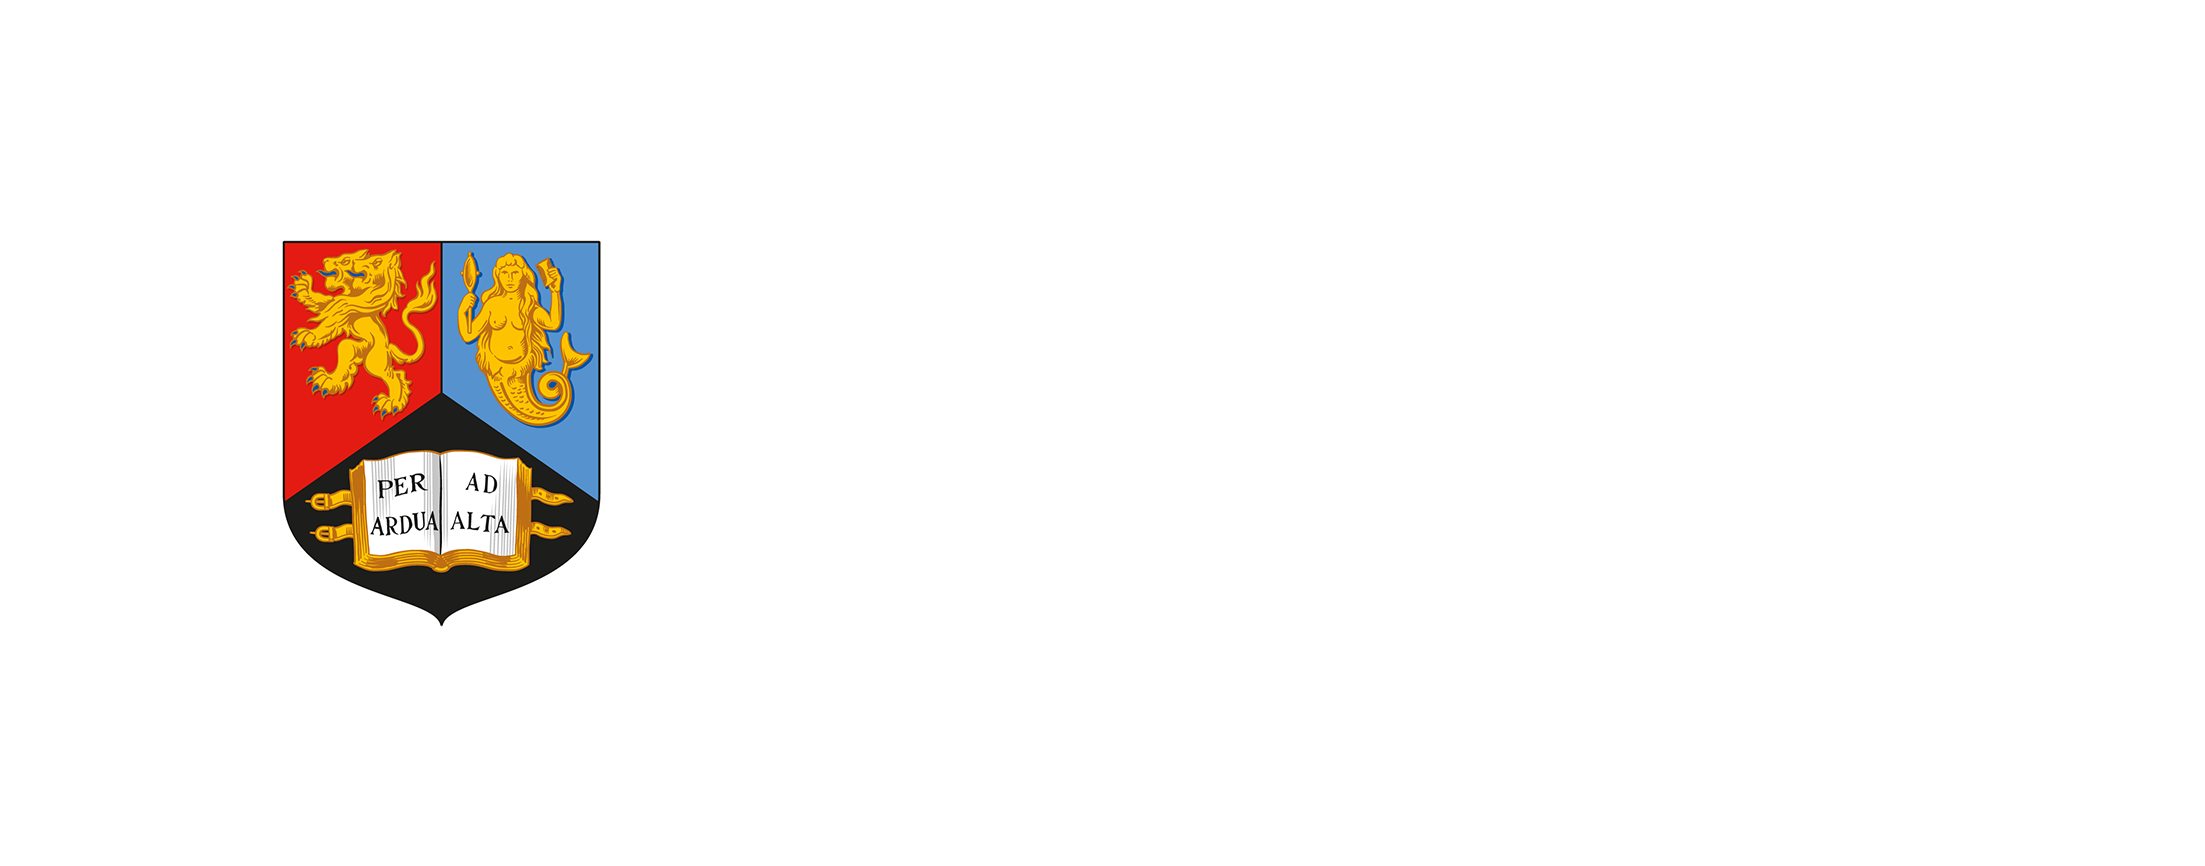 Login | University of Birmingham Accommodation Portal